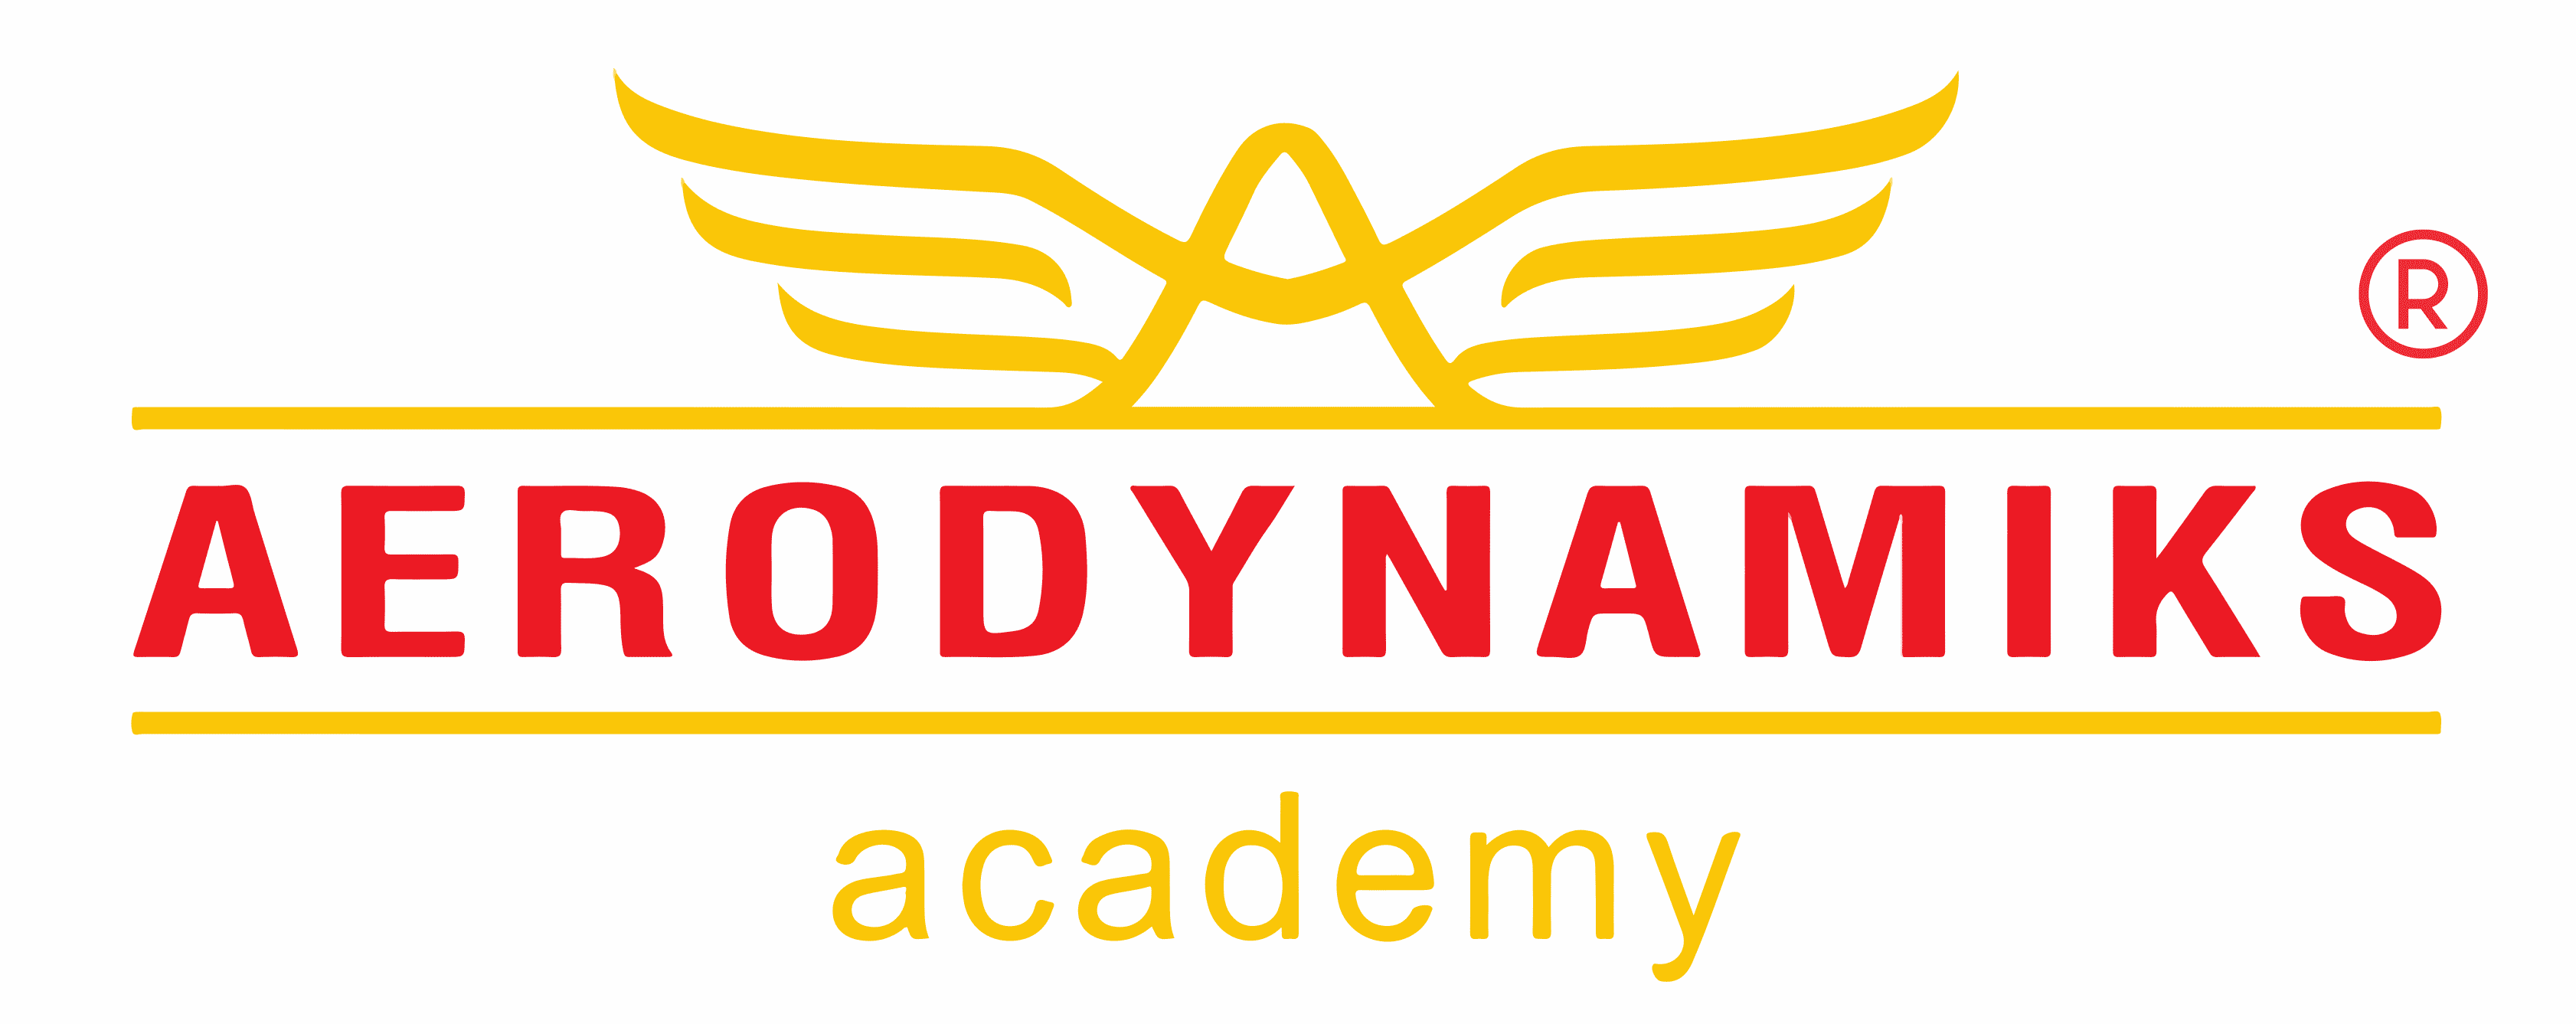 Aerodynamiks Academy